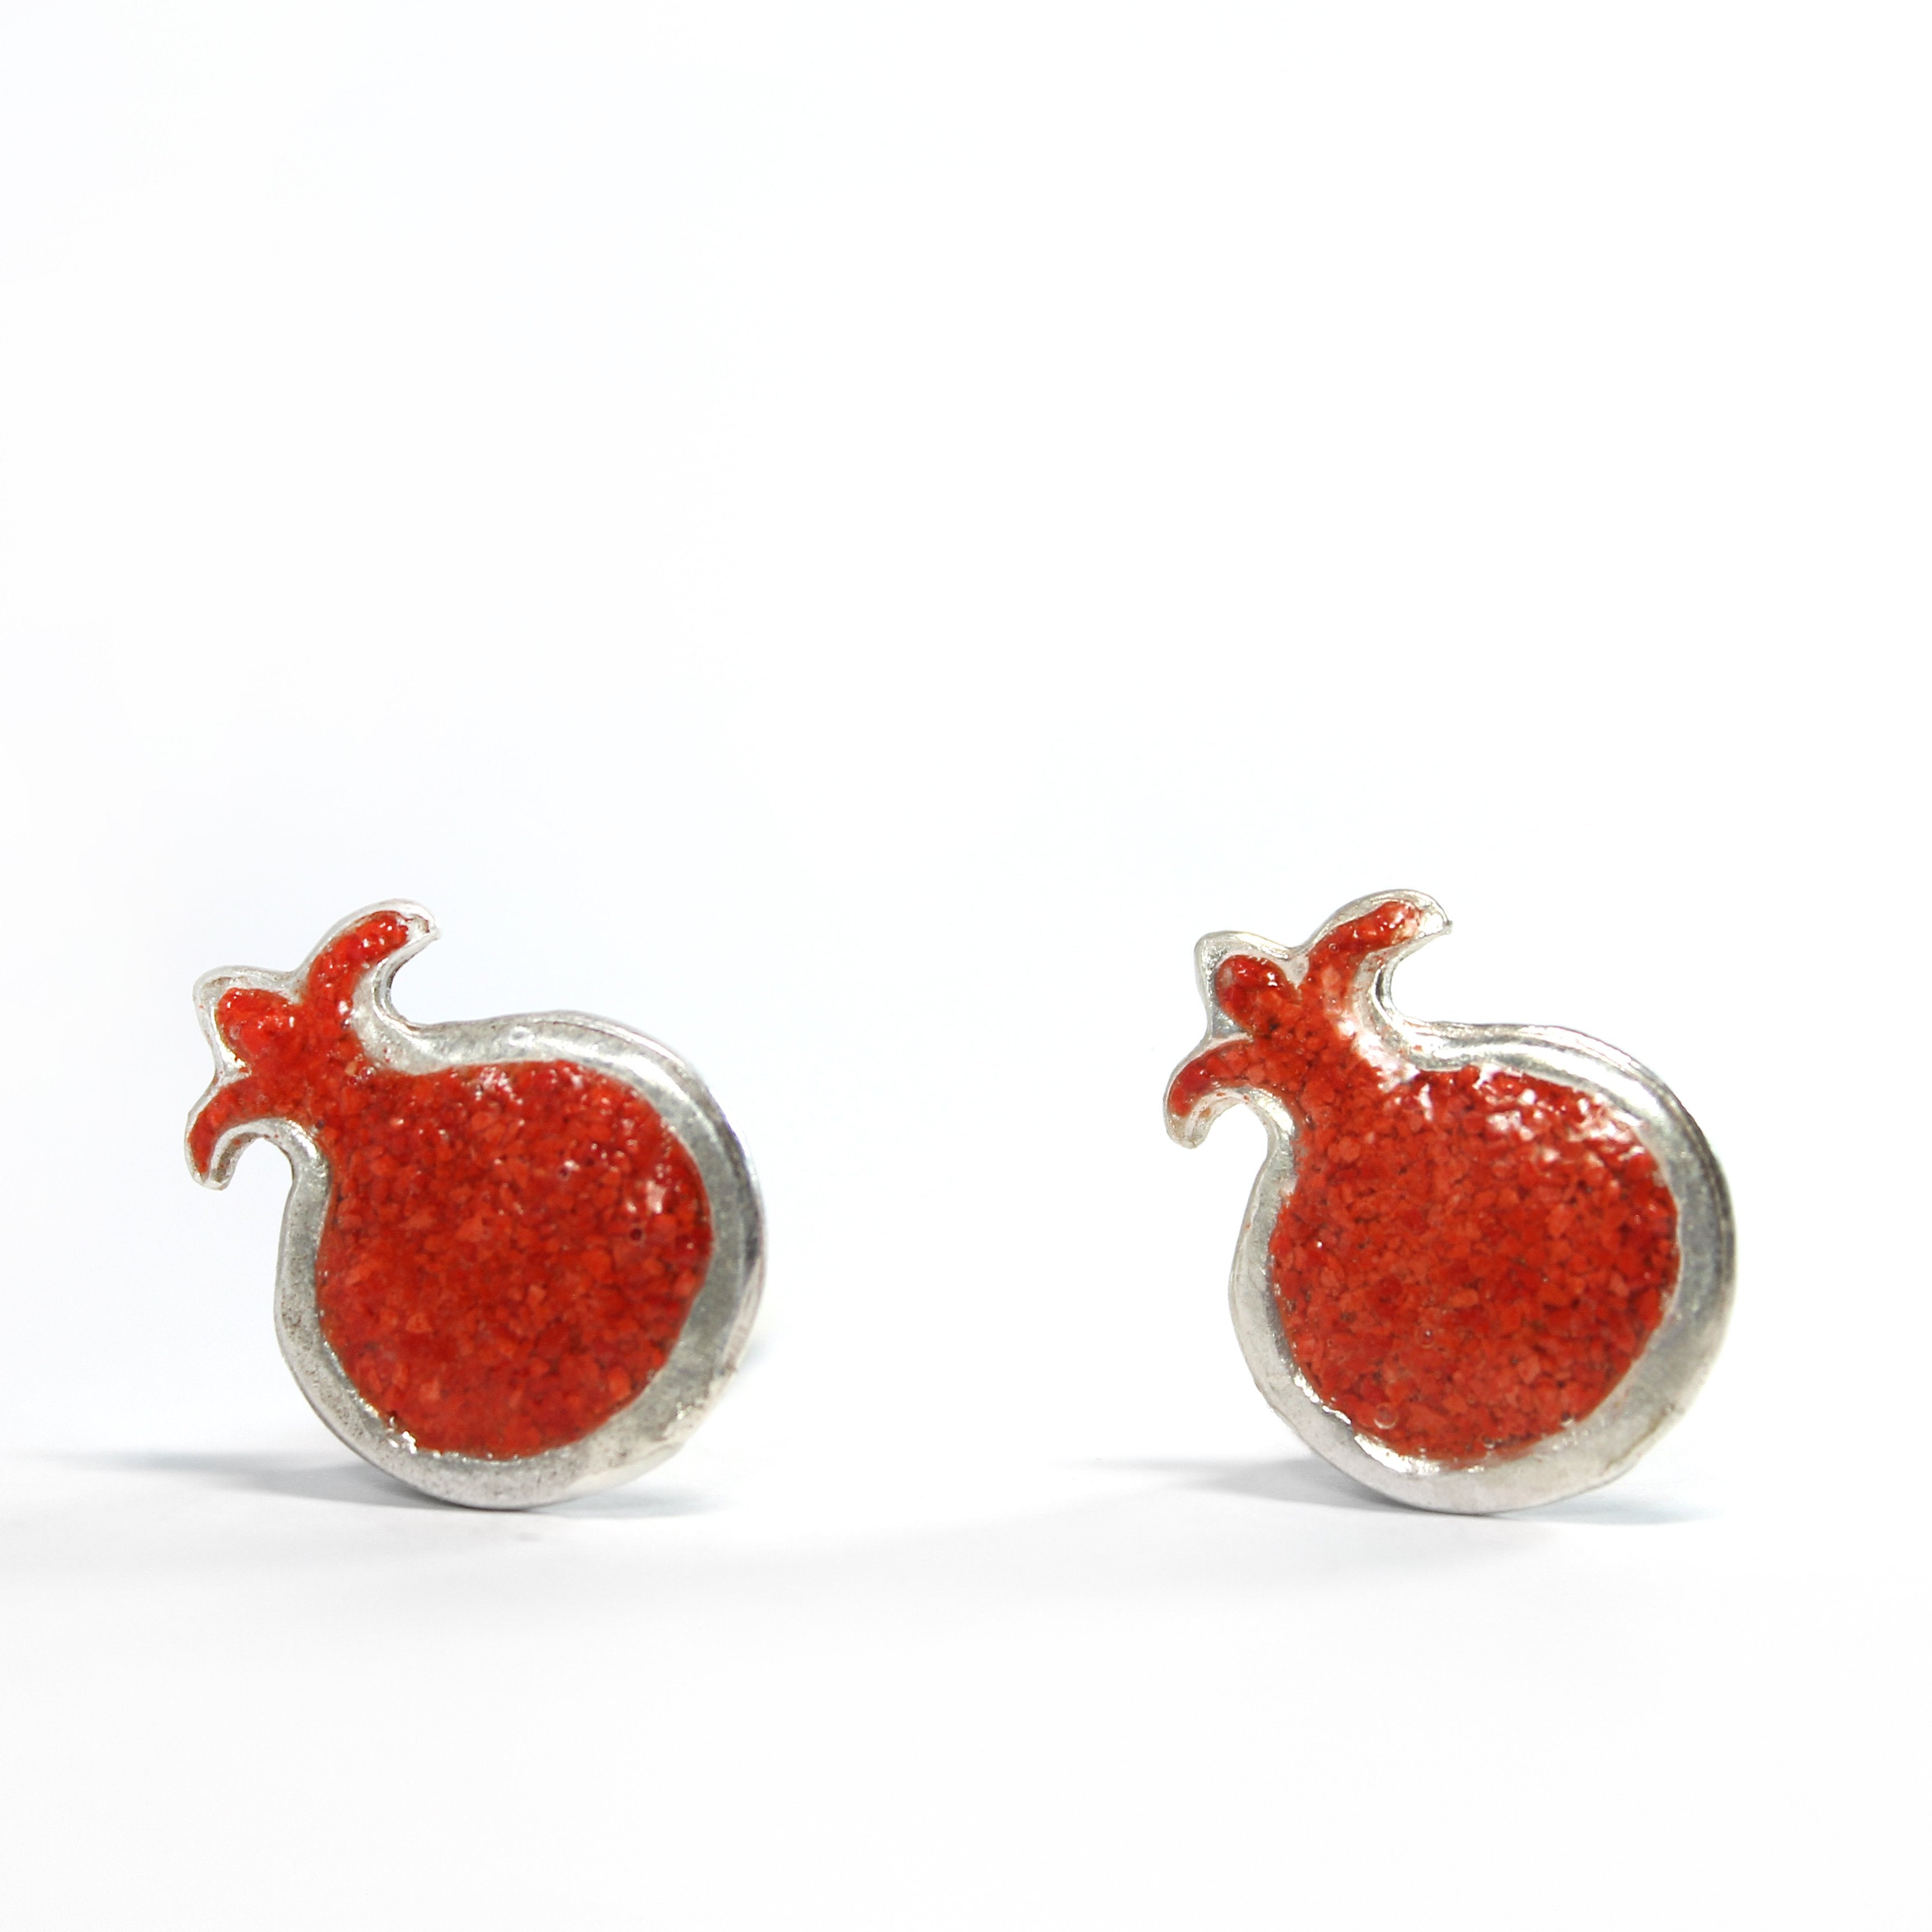 Red Pomegranate Cufflinks - Shulamit Kanter